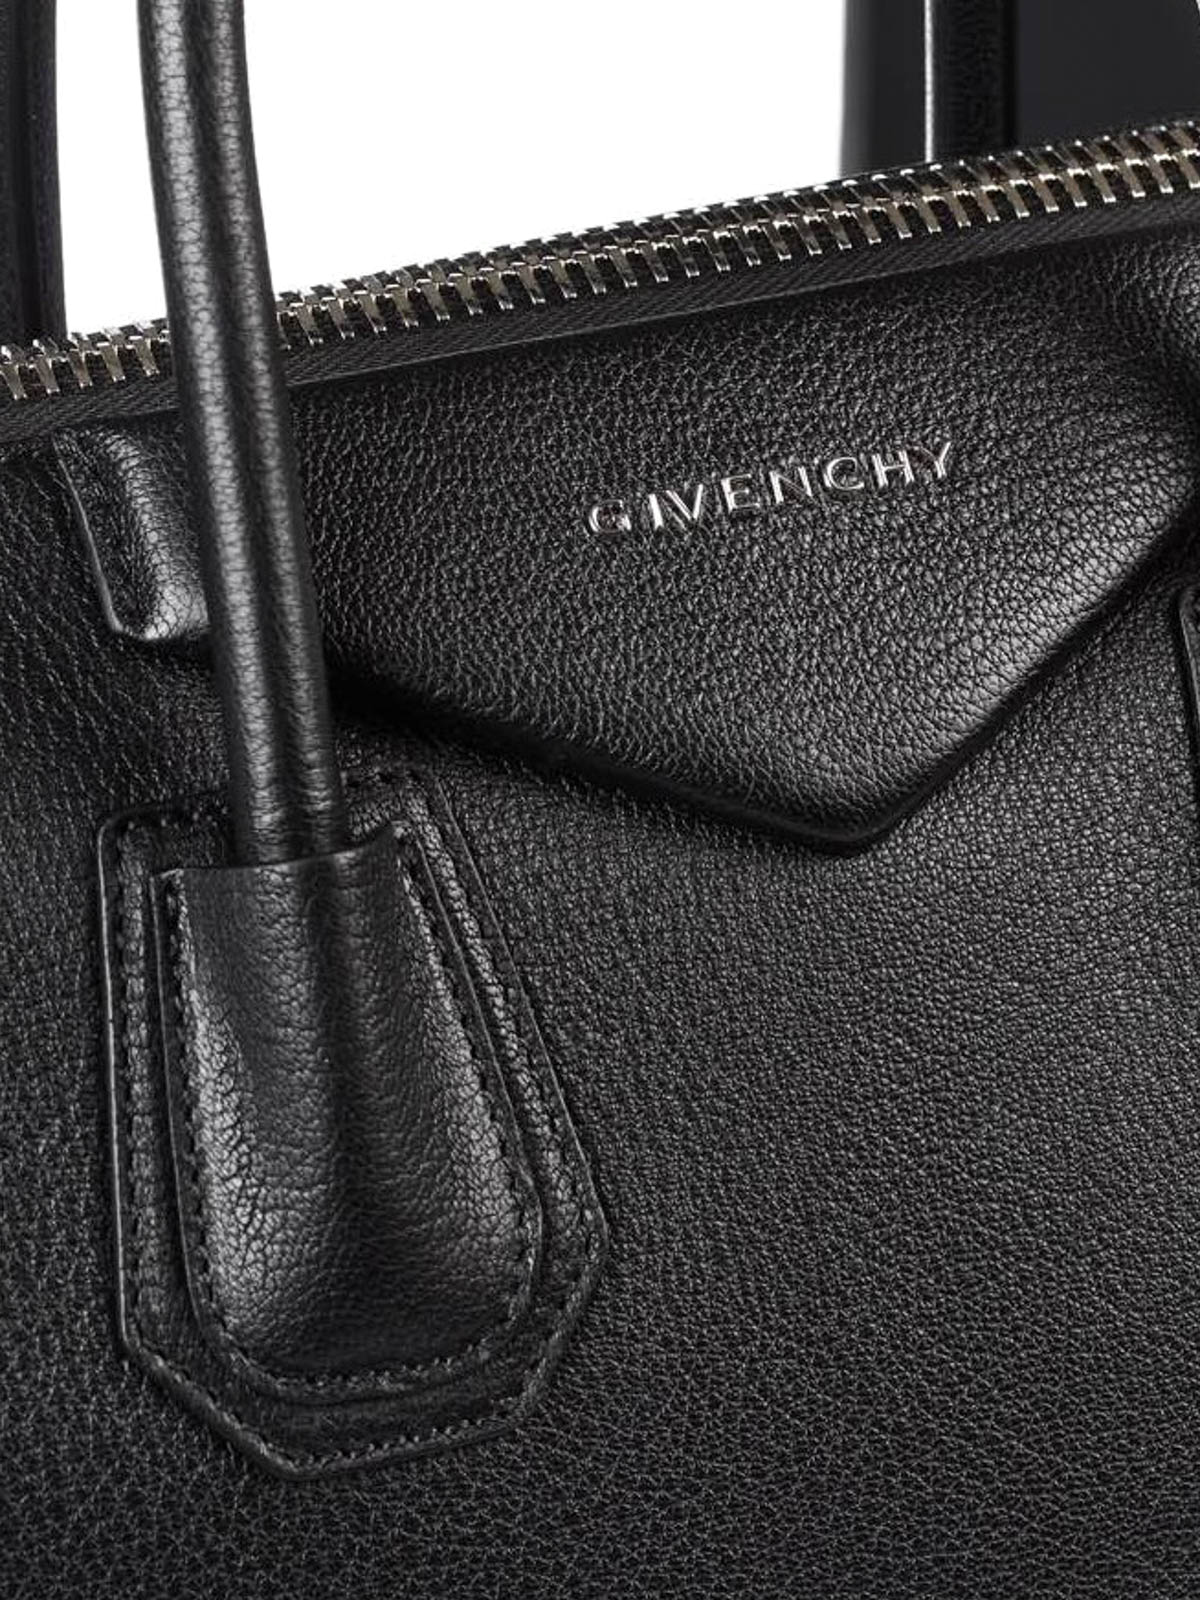 Antigona Medium Leather Tote in Black - Givenchy